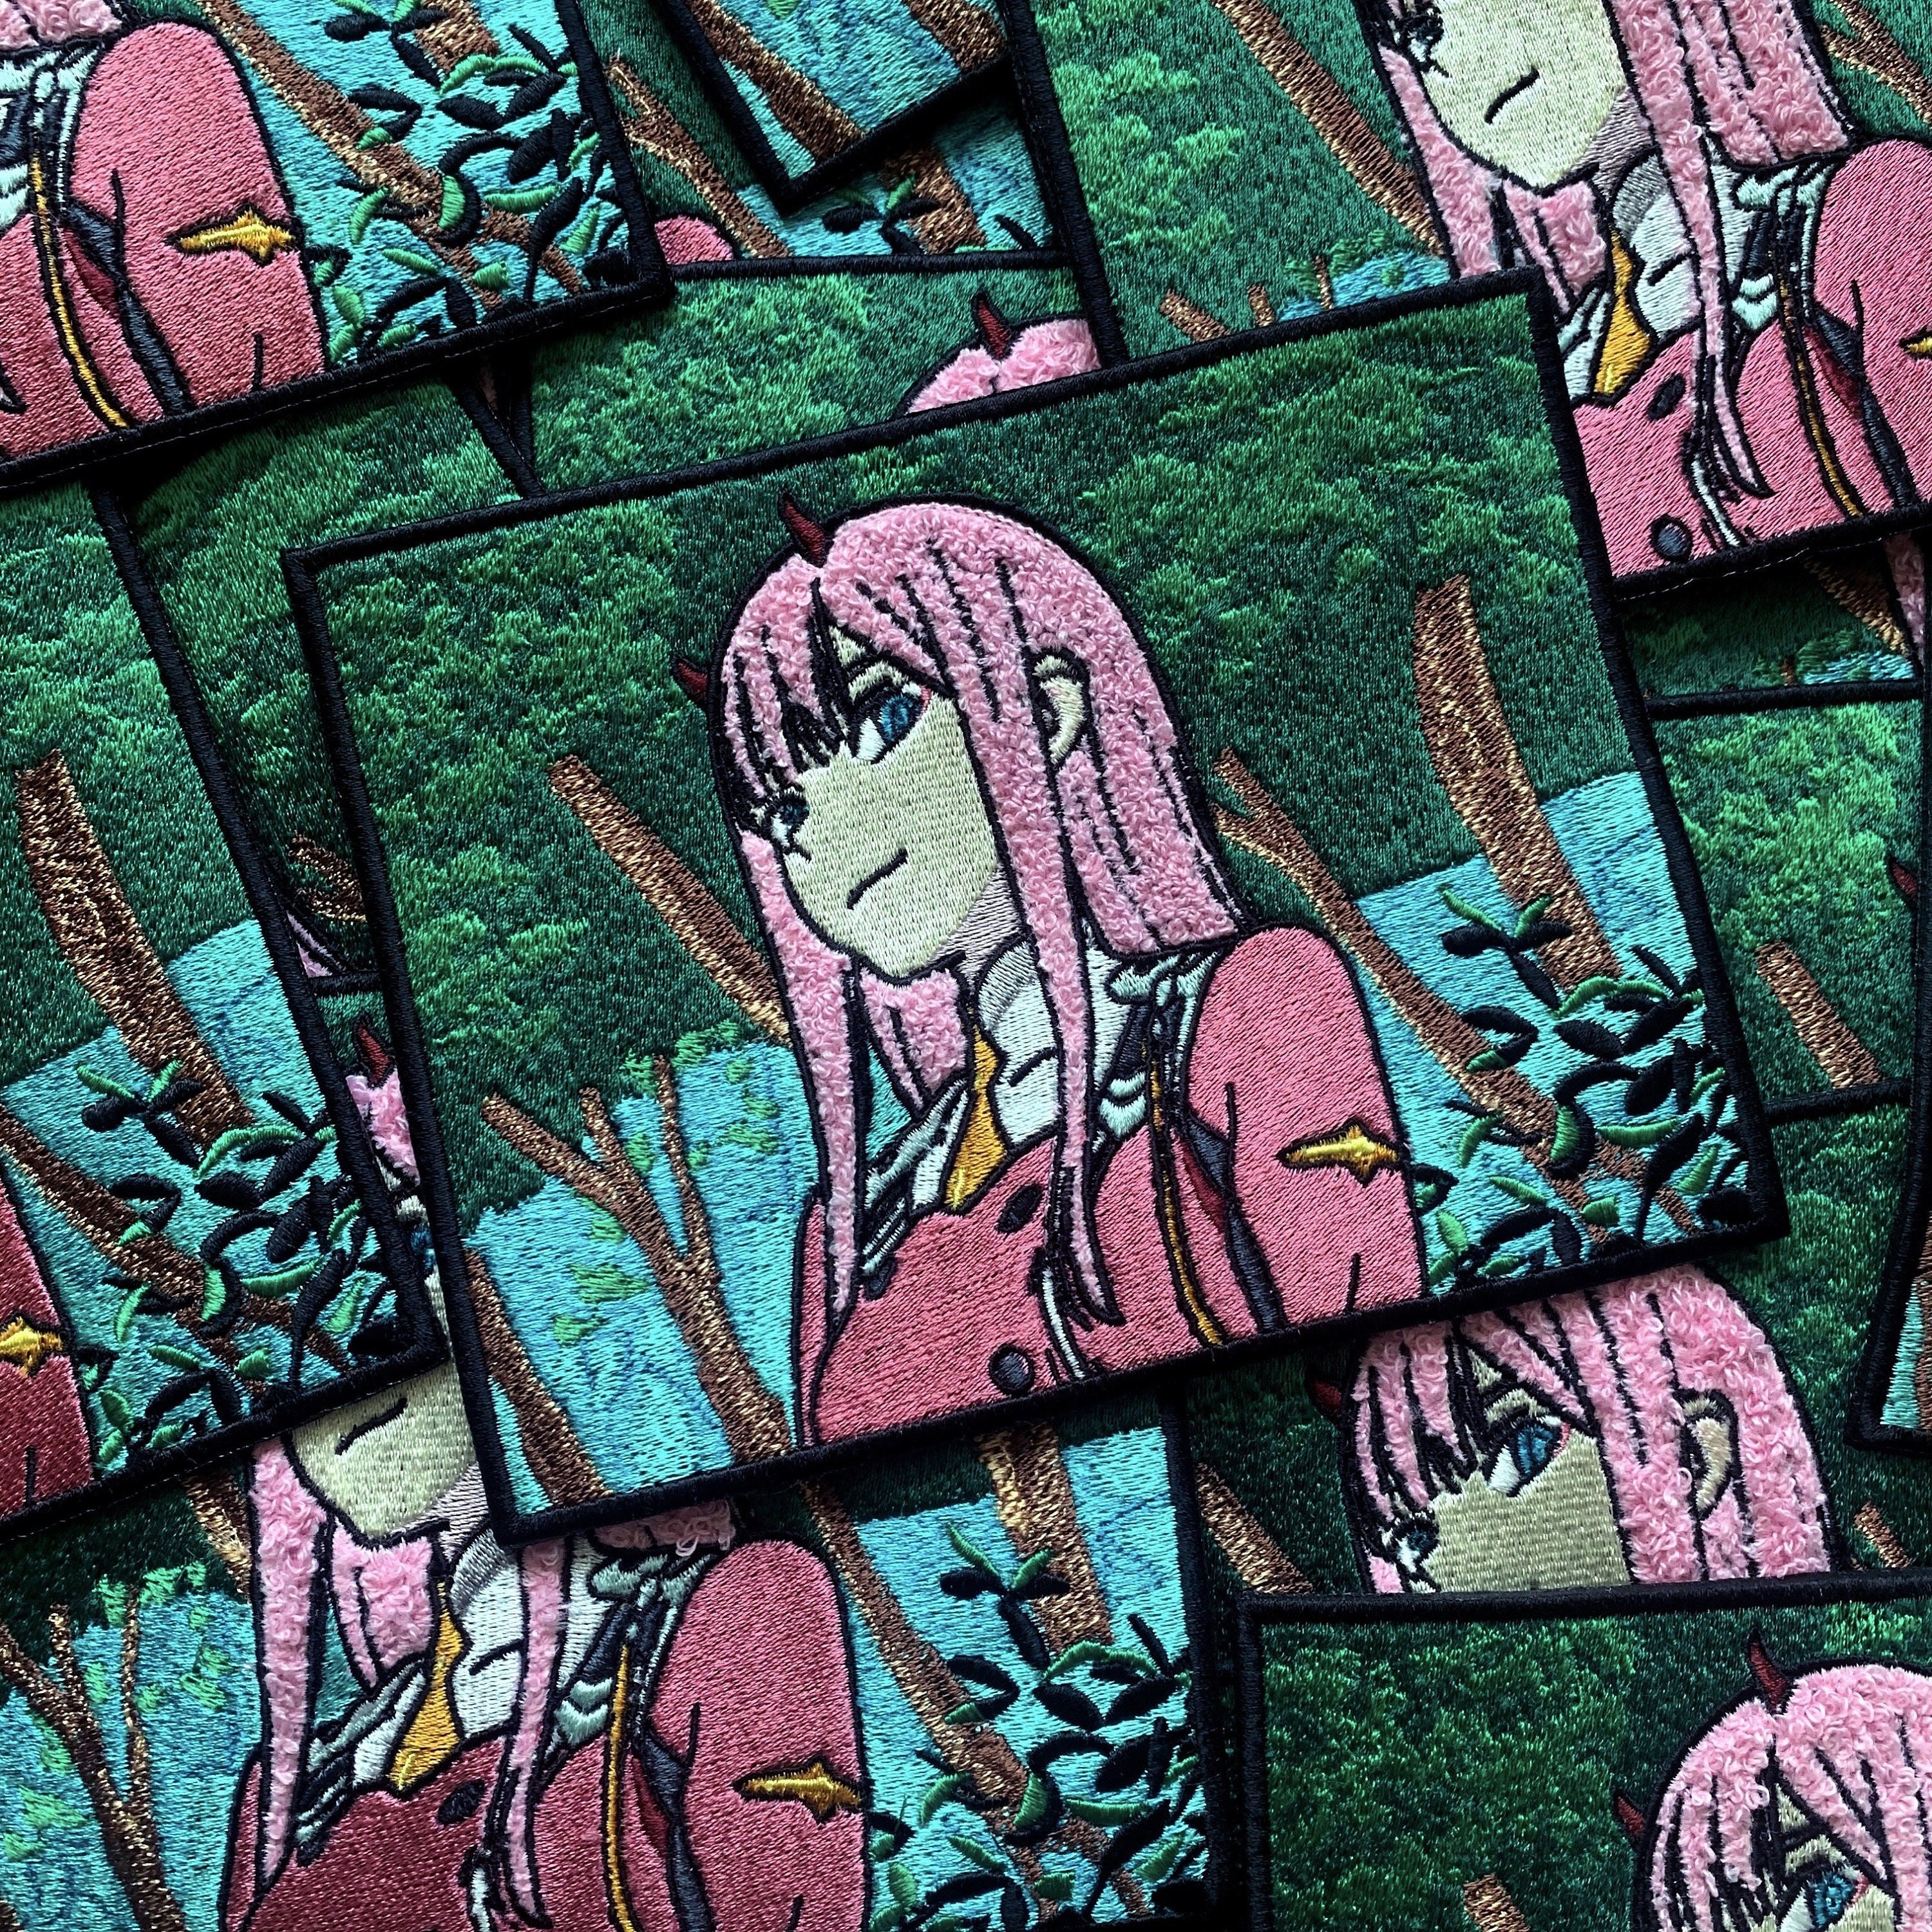 Darling Ohayo Anime Lenticular Shifting Sticker Decal 